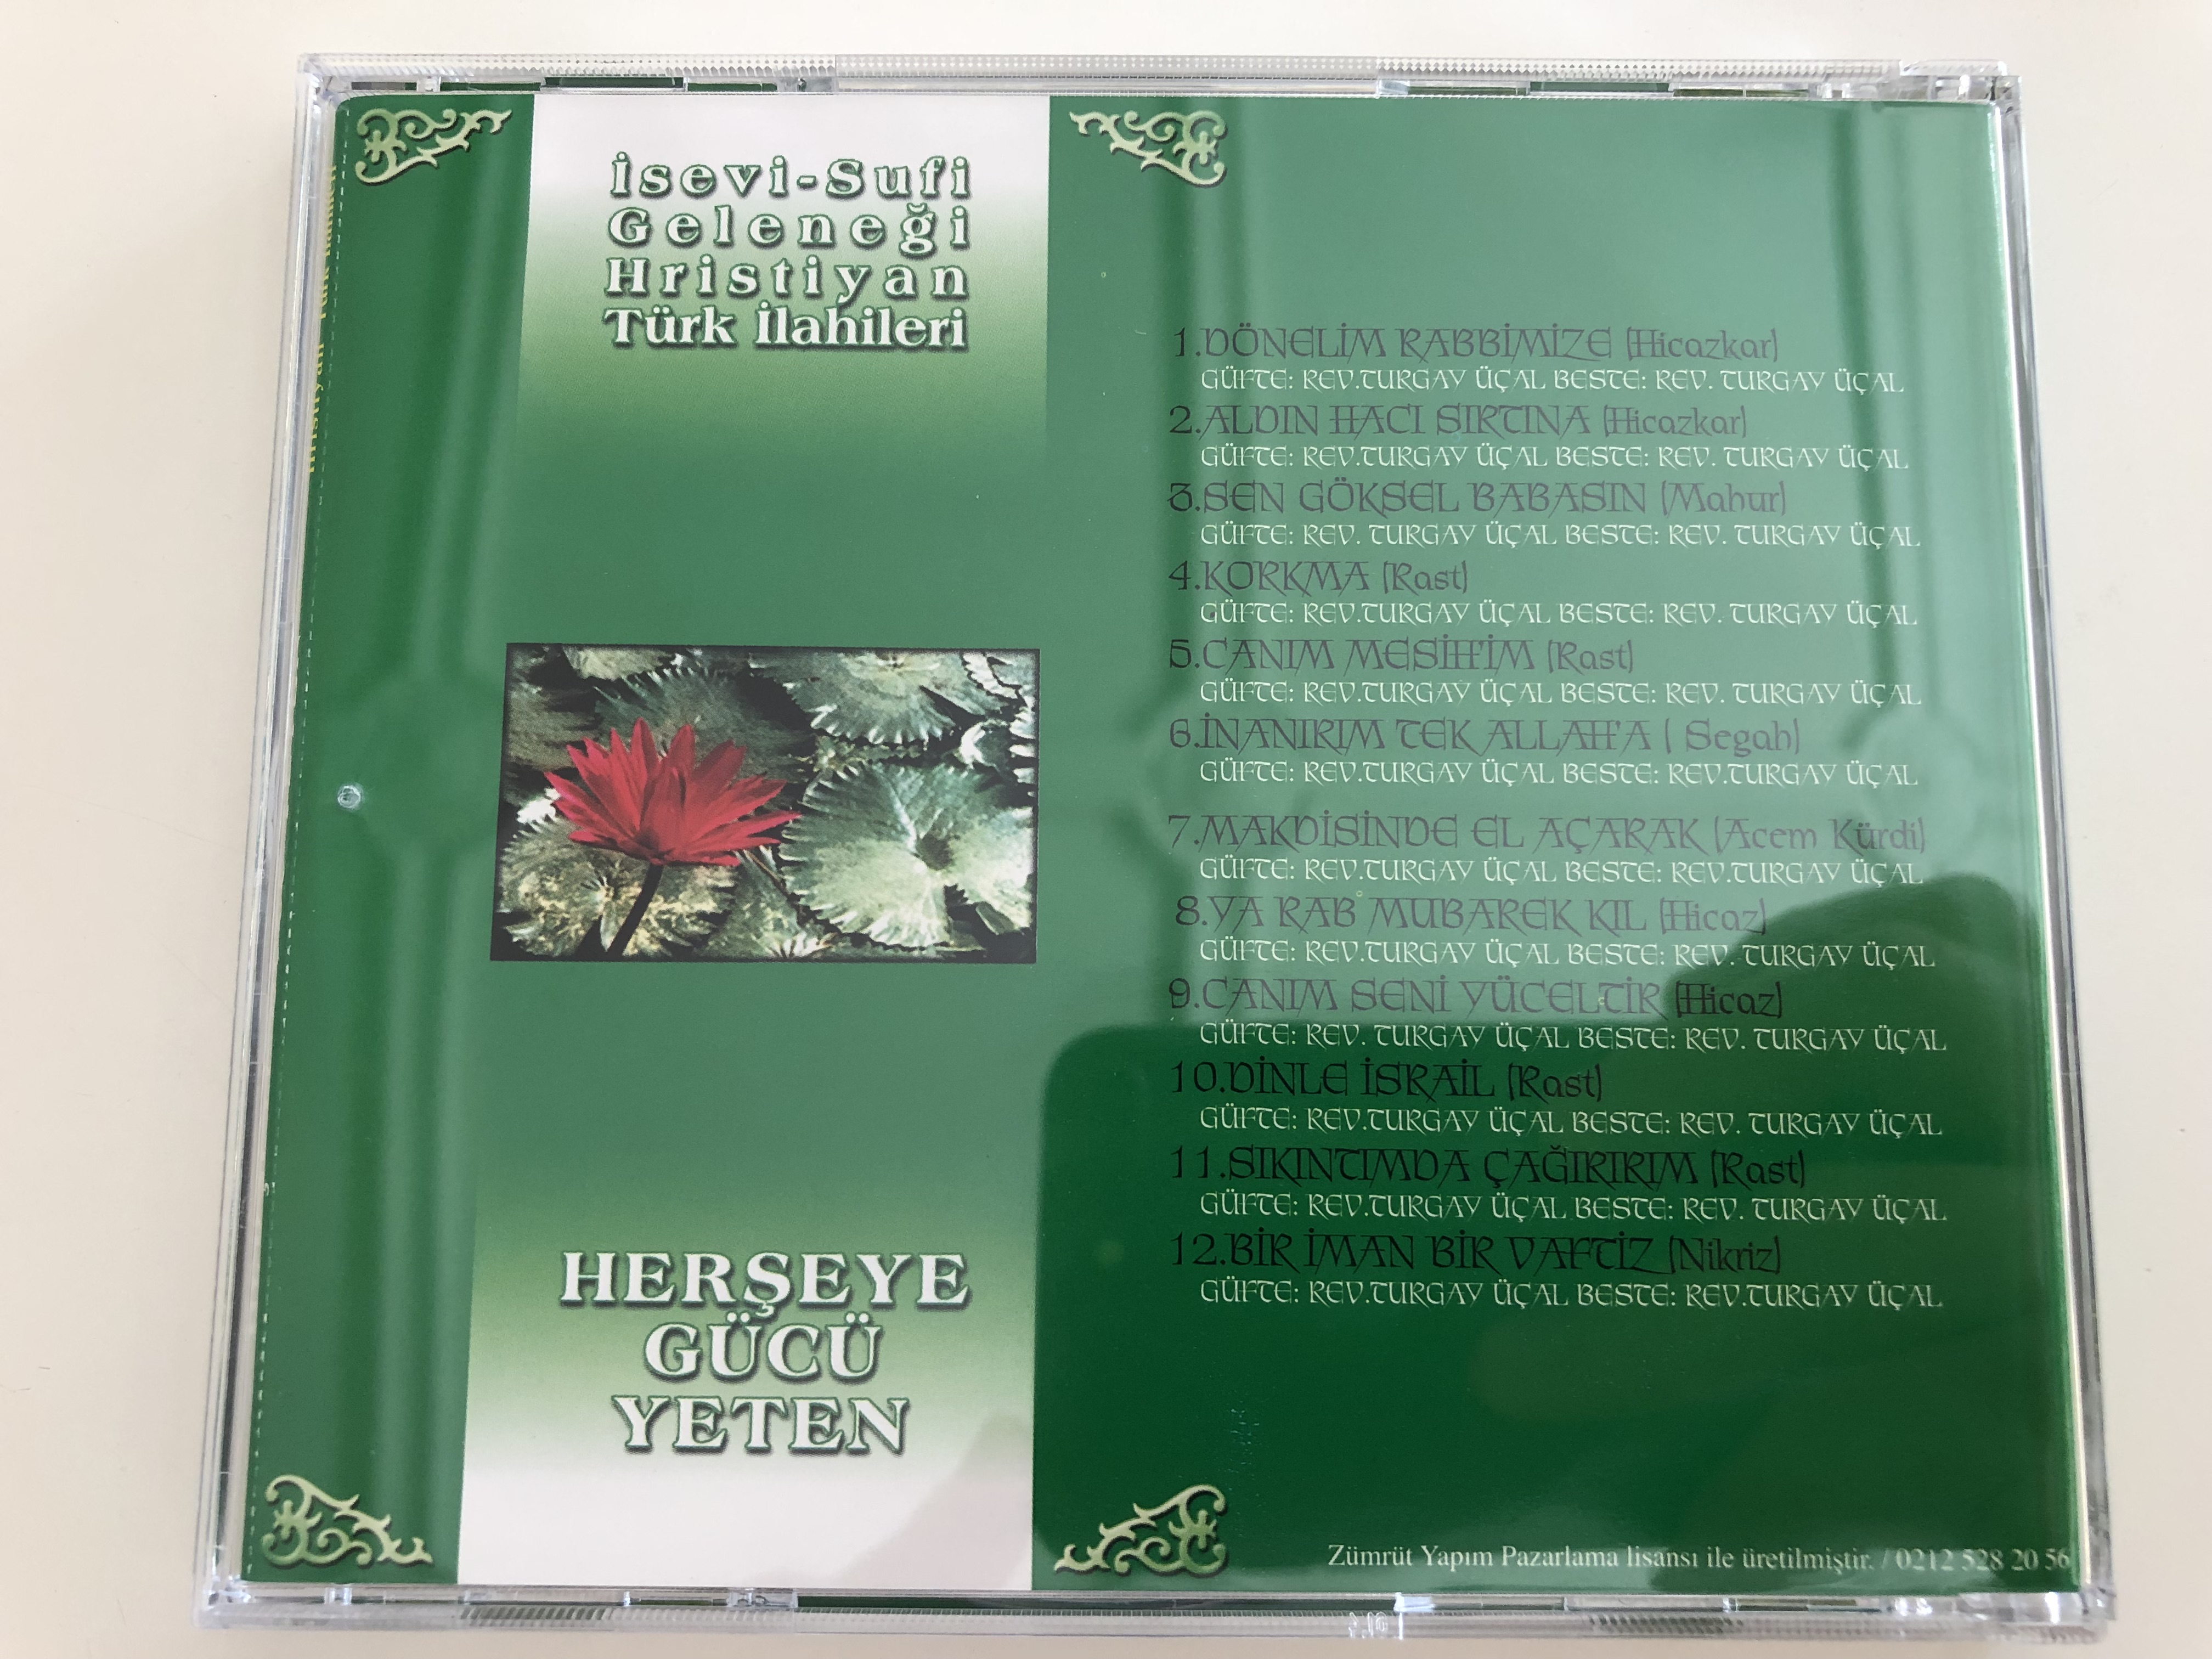 isevi-sufi-gelene-i-hristiyan-t-rk-ilahileri-turkish-christian-praise-and-worship-songs-cd-2-her-eye-g-c-yeten-audio-cd-8-.jpg